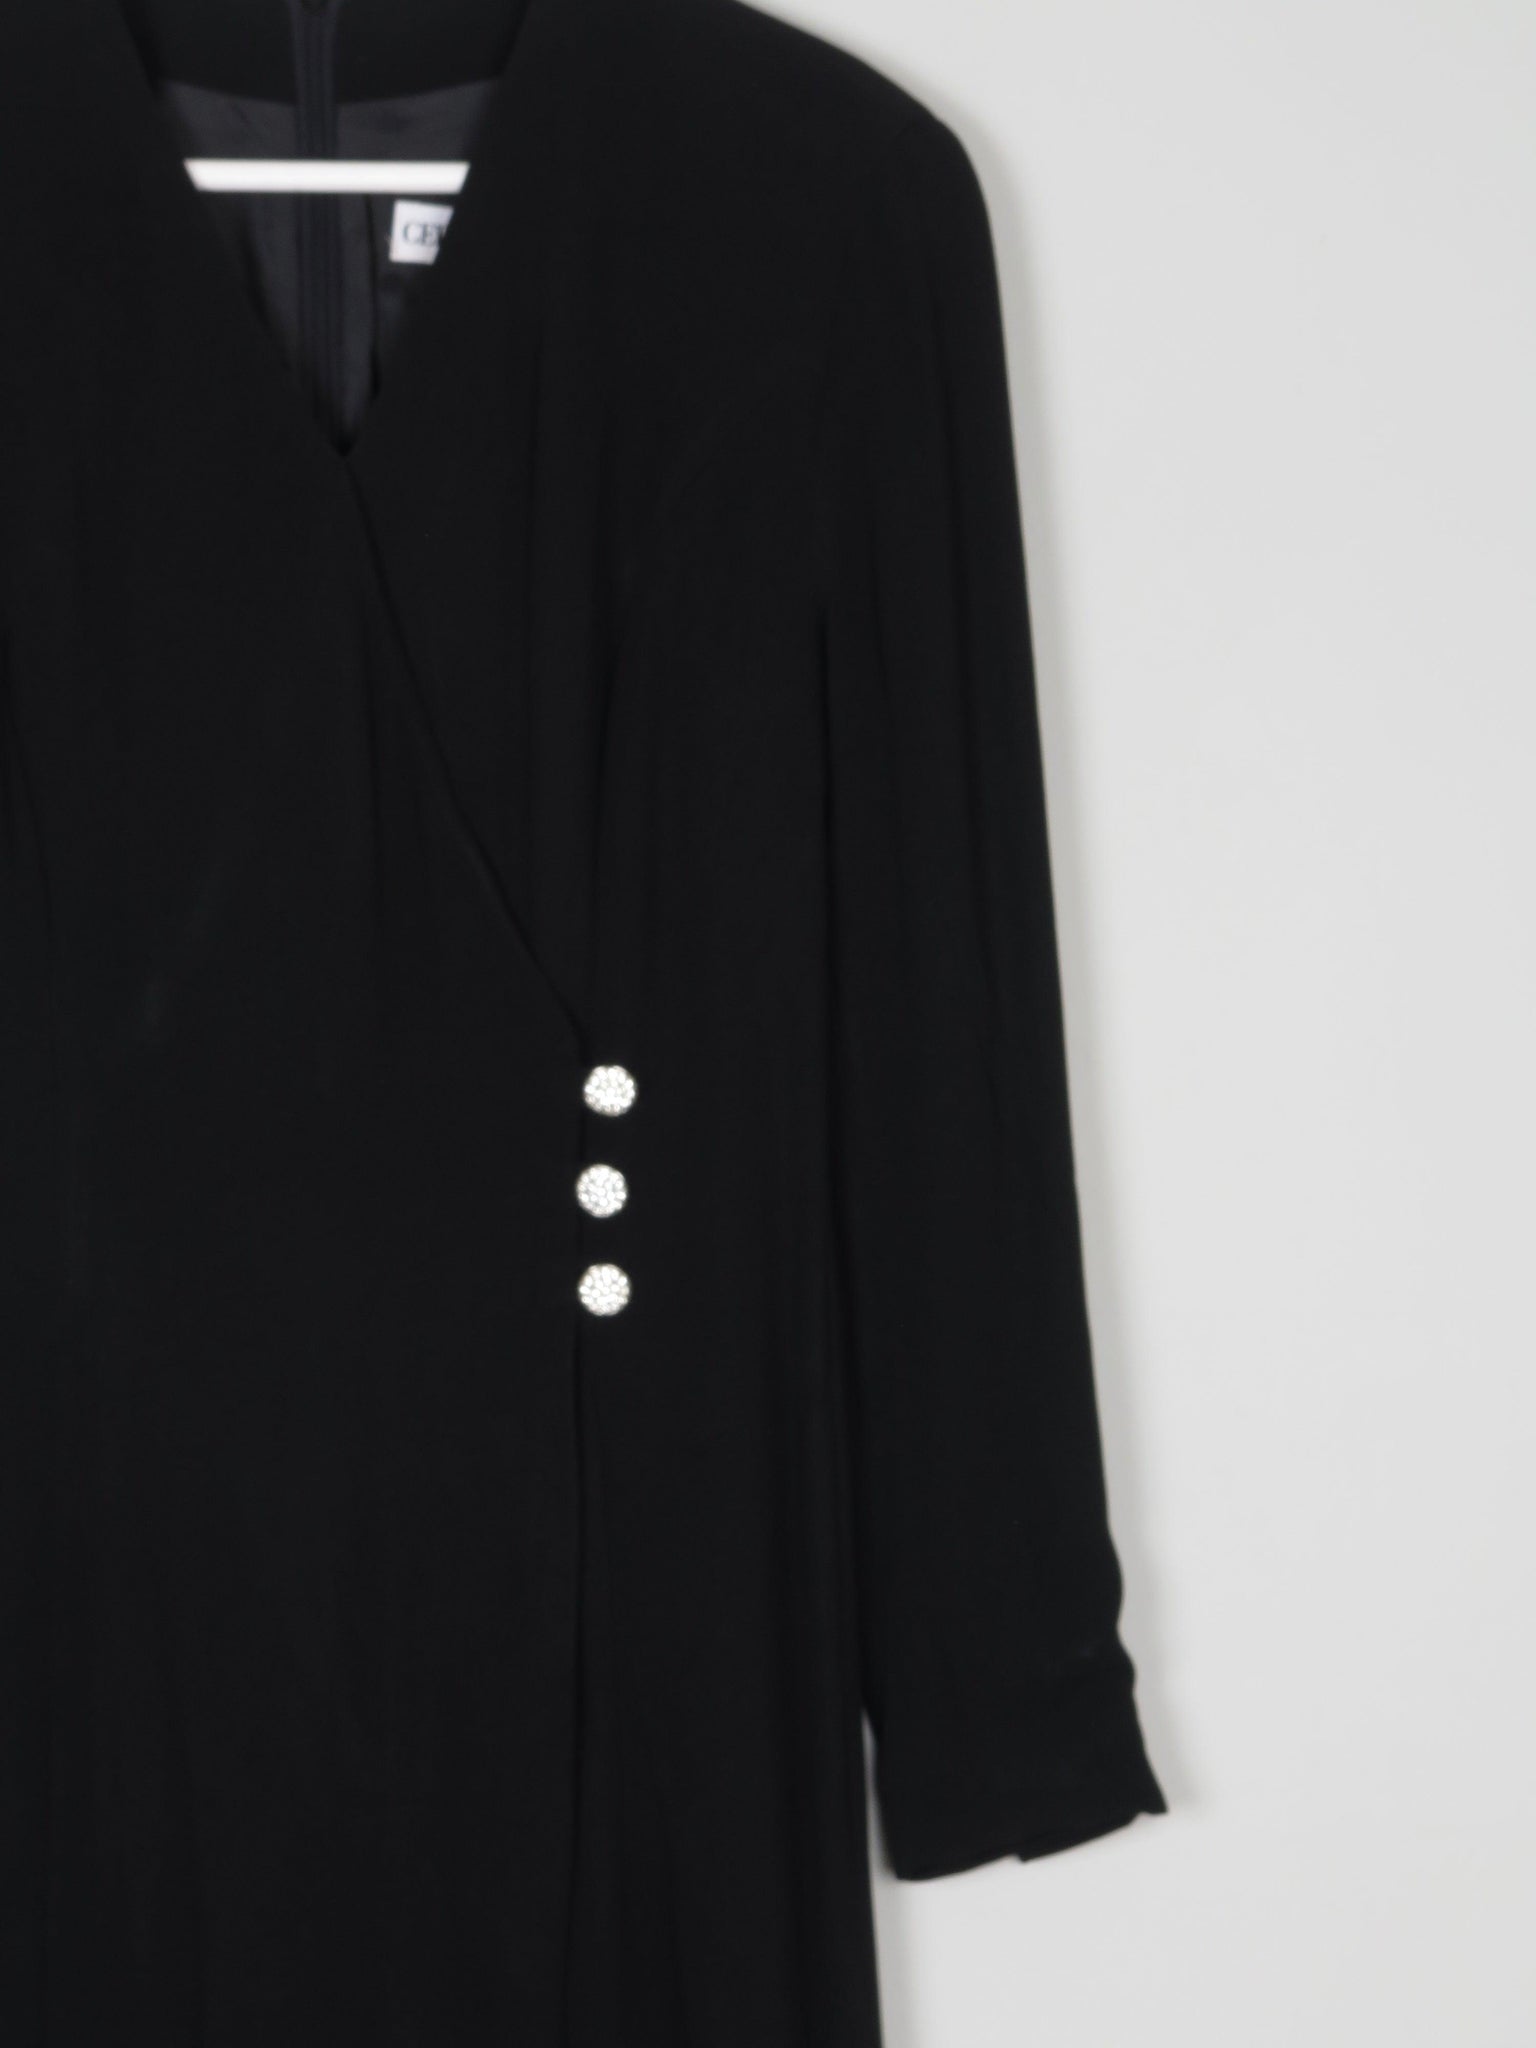 Black Cerruti 1881  Cross Over Style Dress 8/34